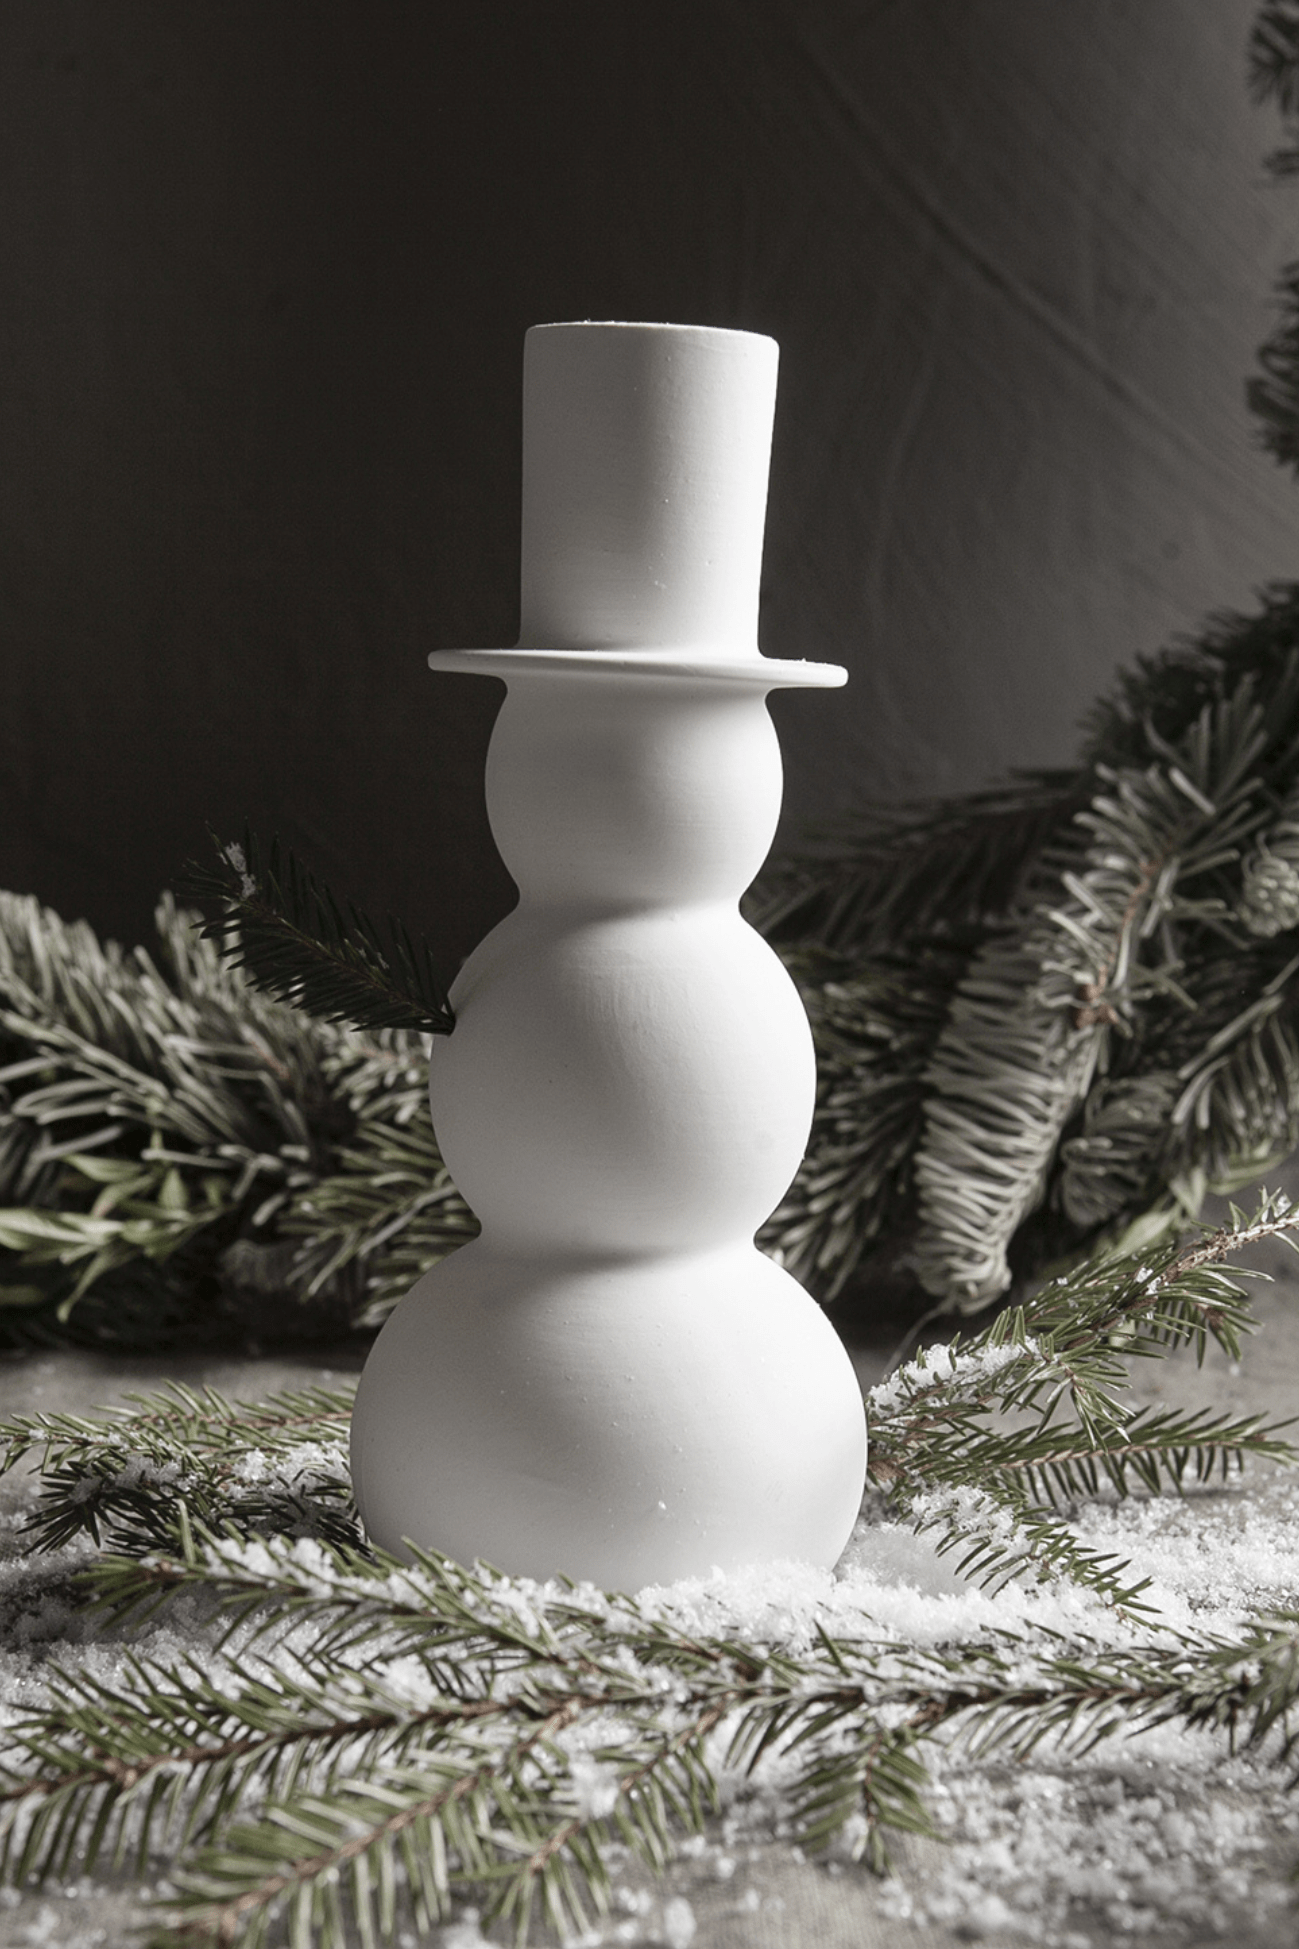 Storefactory Scandinavia Folke Pupazzo di neve grande in ceramica opaca bianca